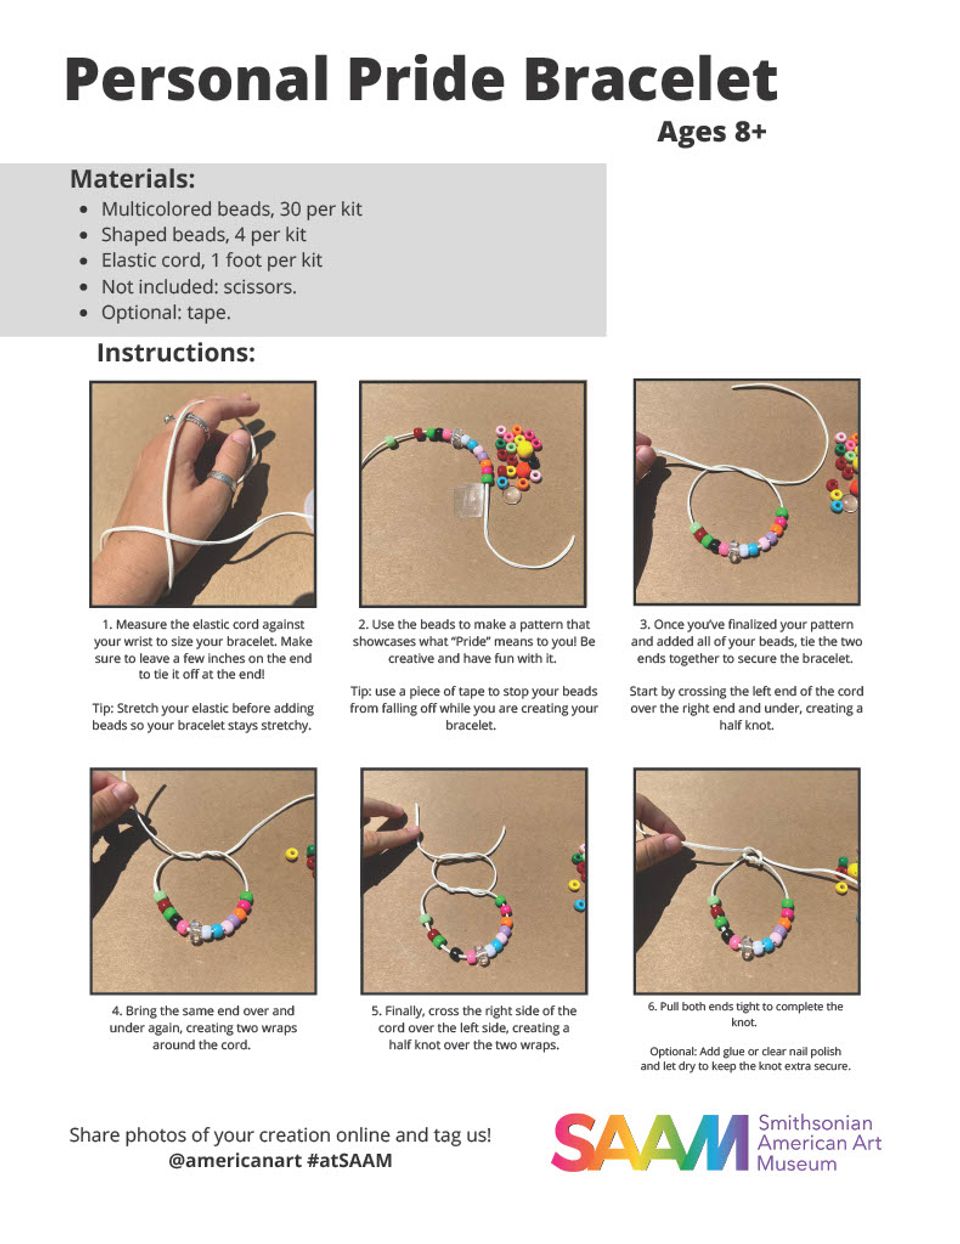 A PDF showing 6 steps to make a personal pride bracelet